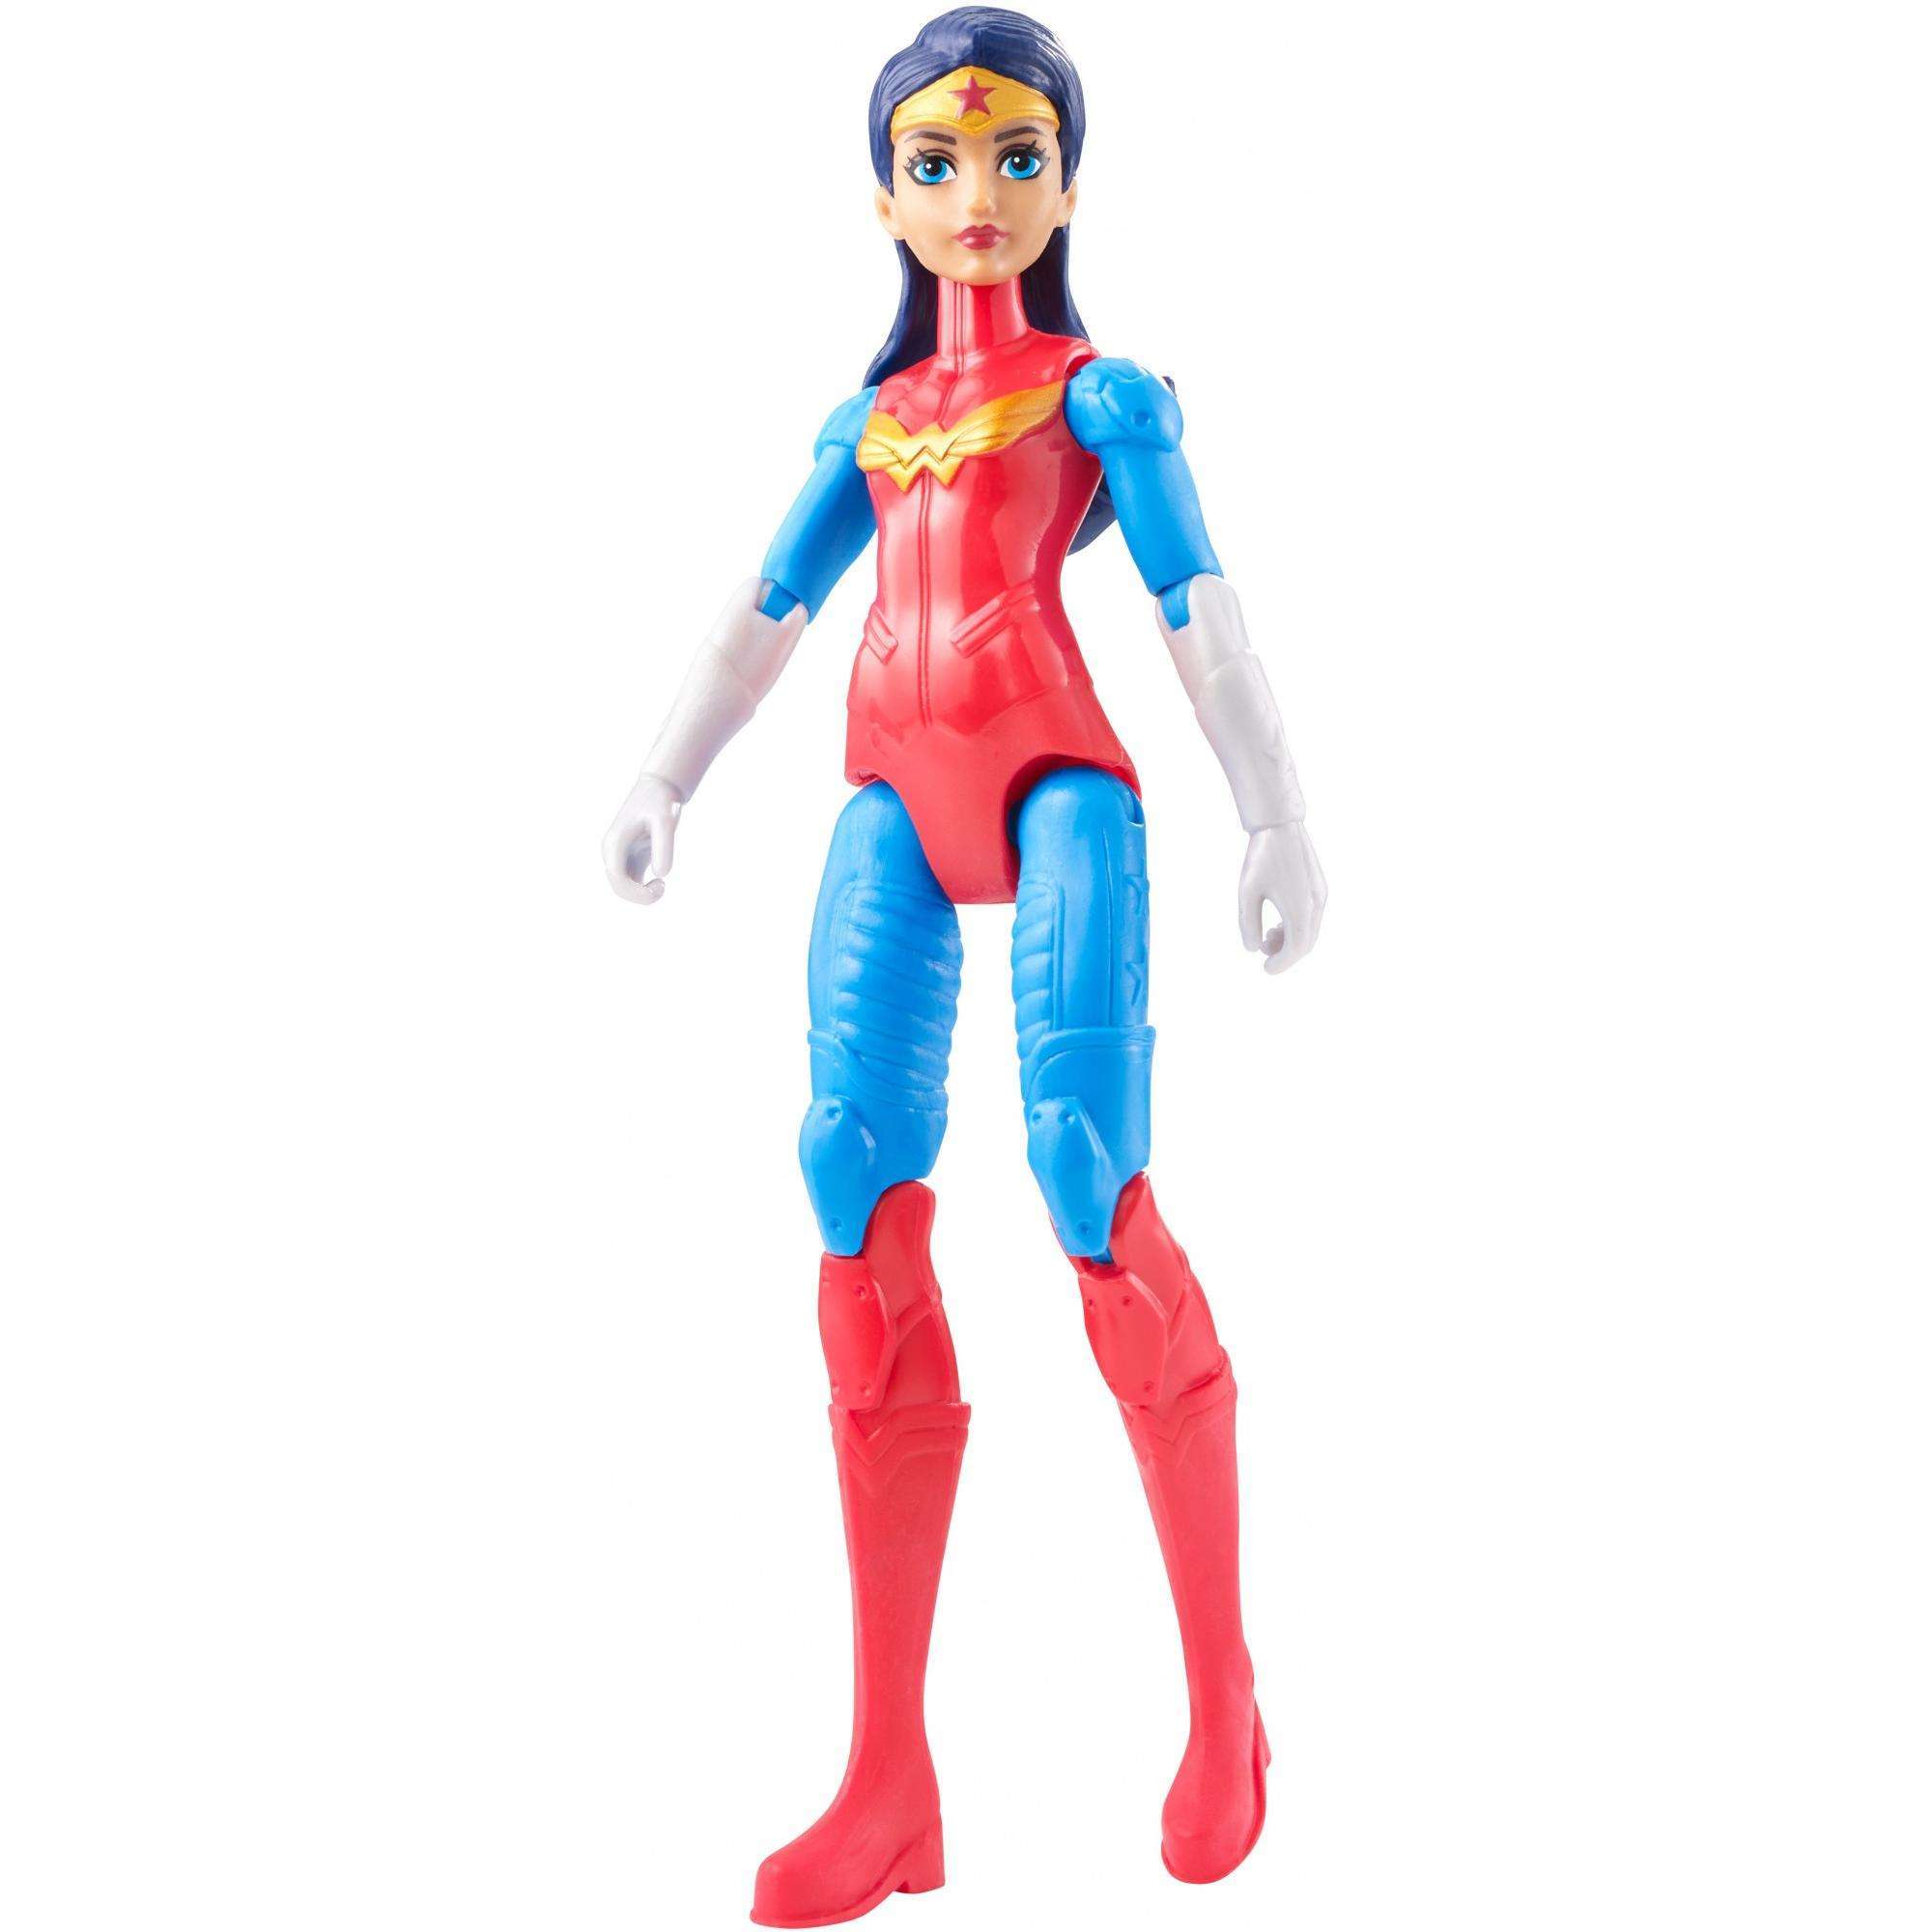 DC Super Hero Girls Wonder Woman & Motorcycle Doll - image 5 of 7